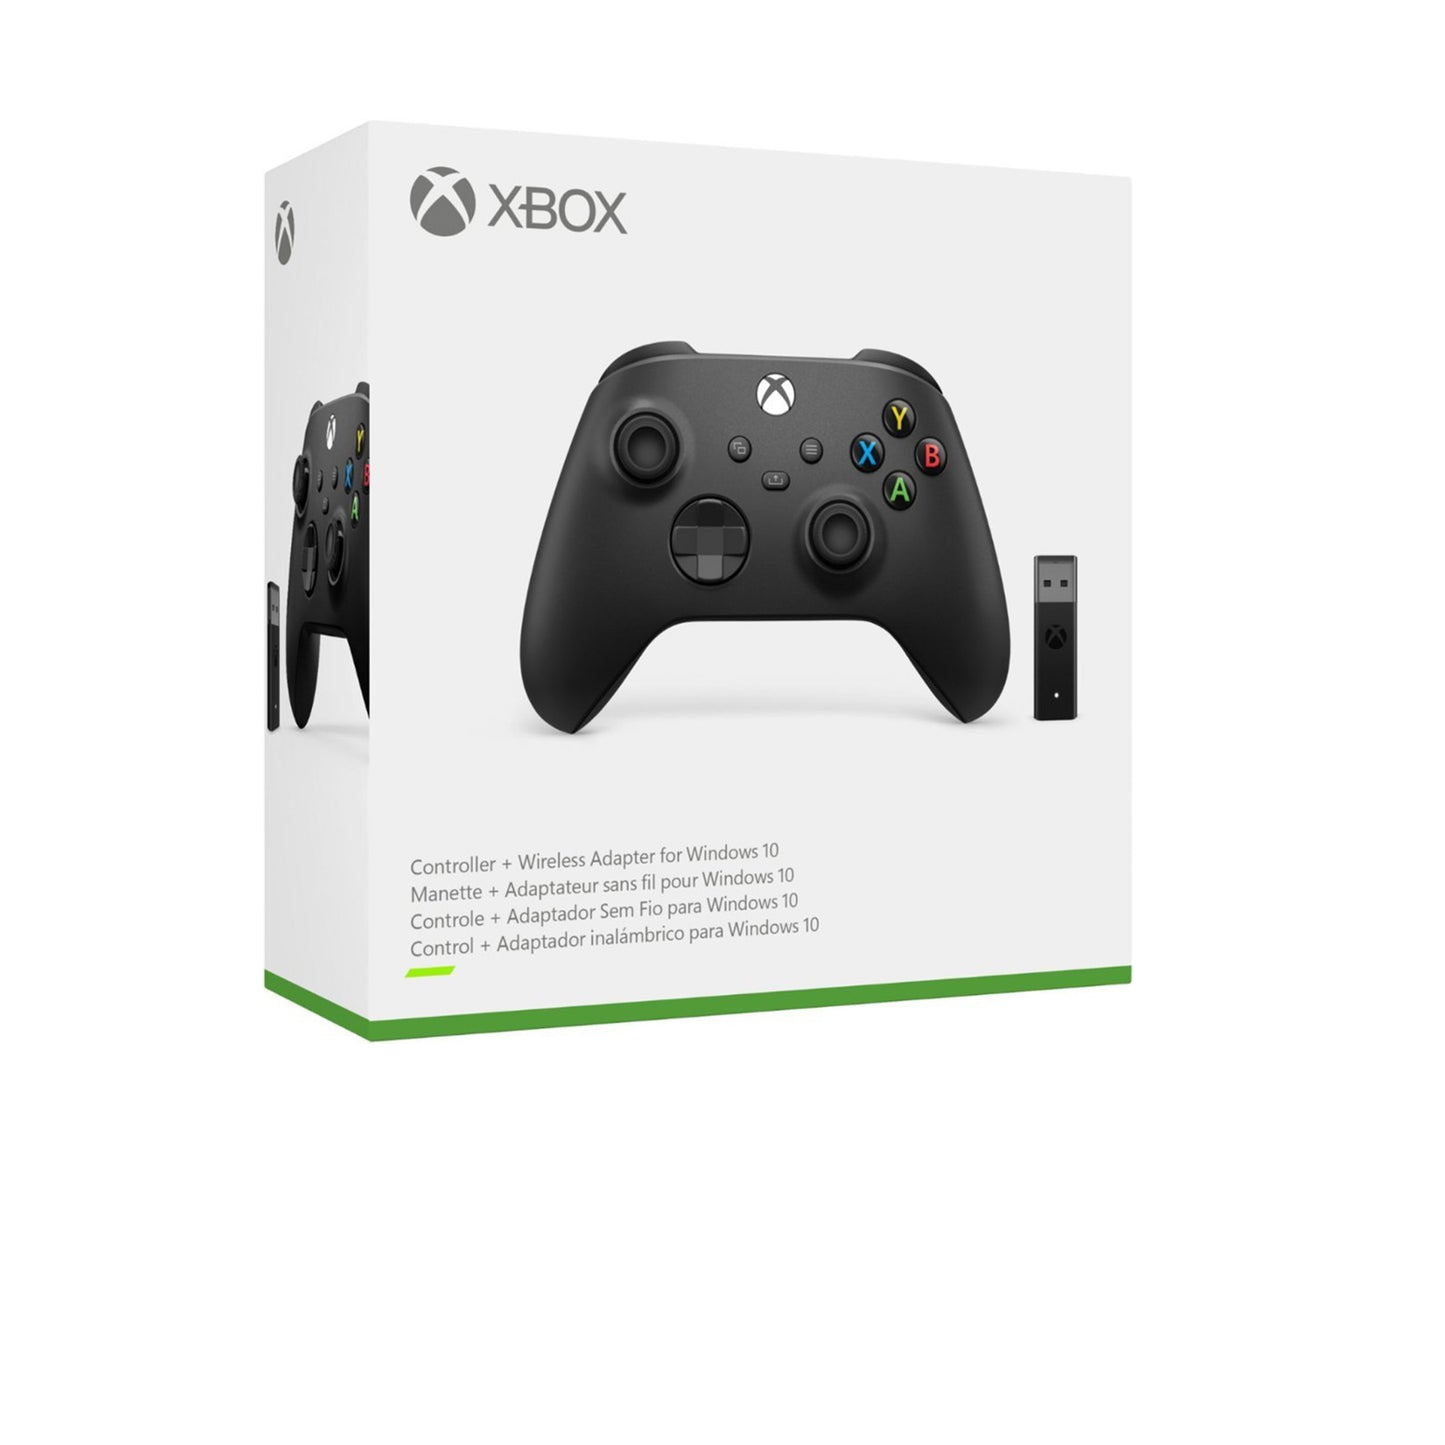 Microsoft - وحدة تحكم Xbox اللاسلكية لأجهزة Windows وXbox Series X وXbox Series S وXbox One + محول لاسلكي - أسود كربوني 